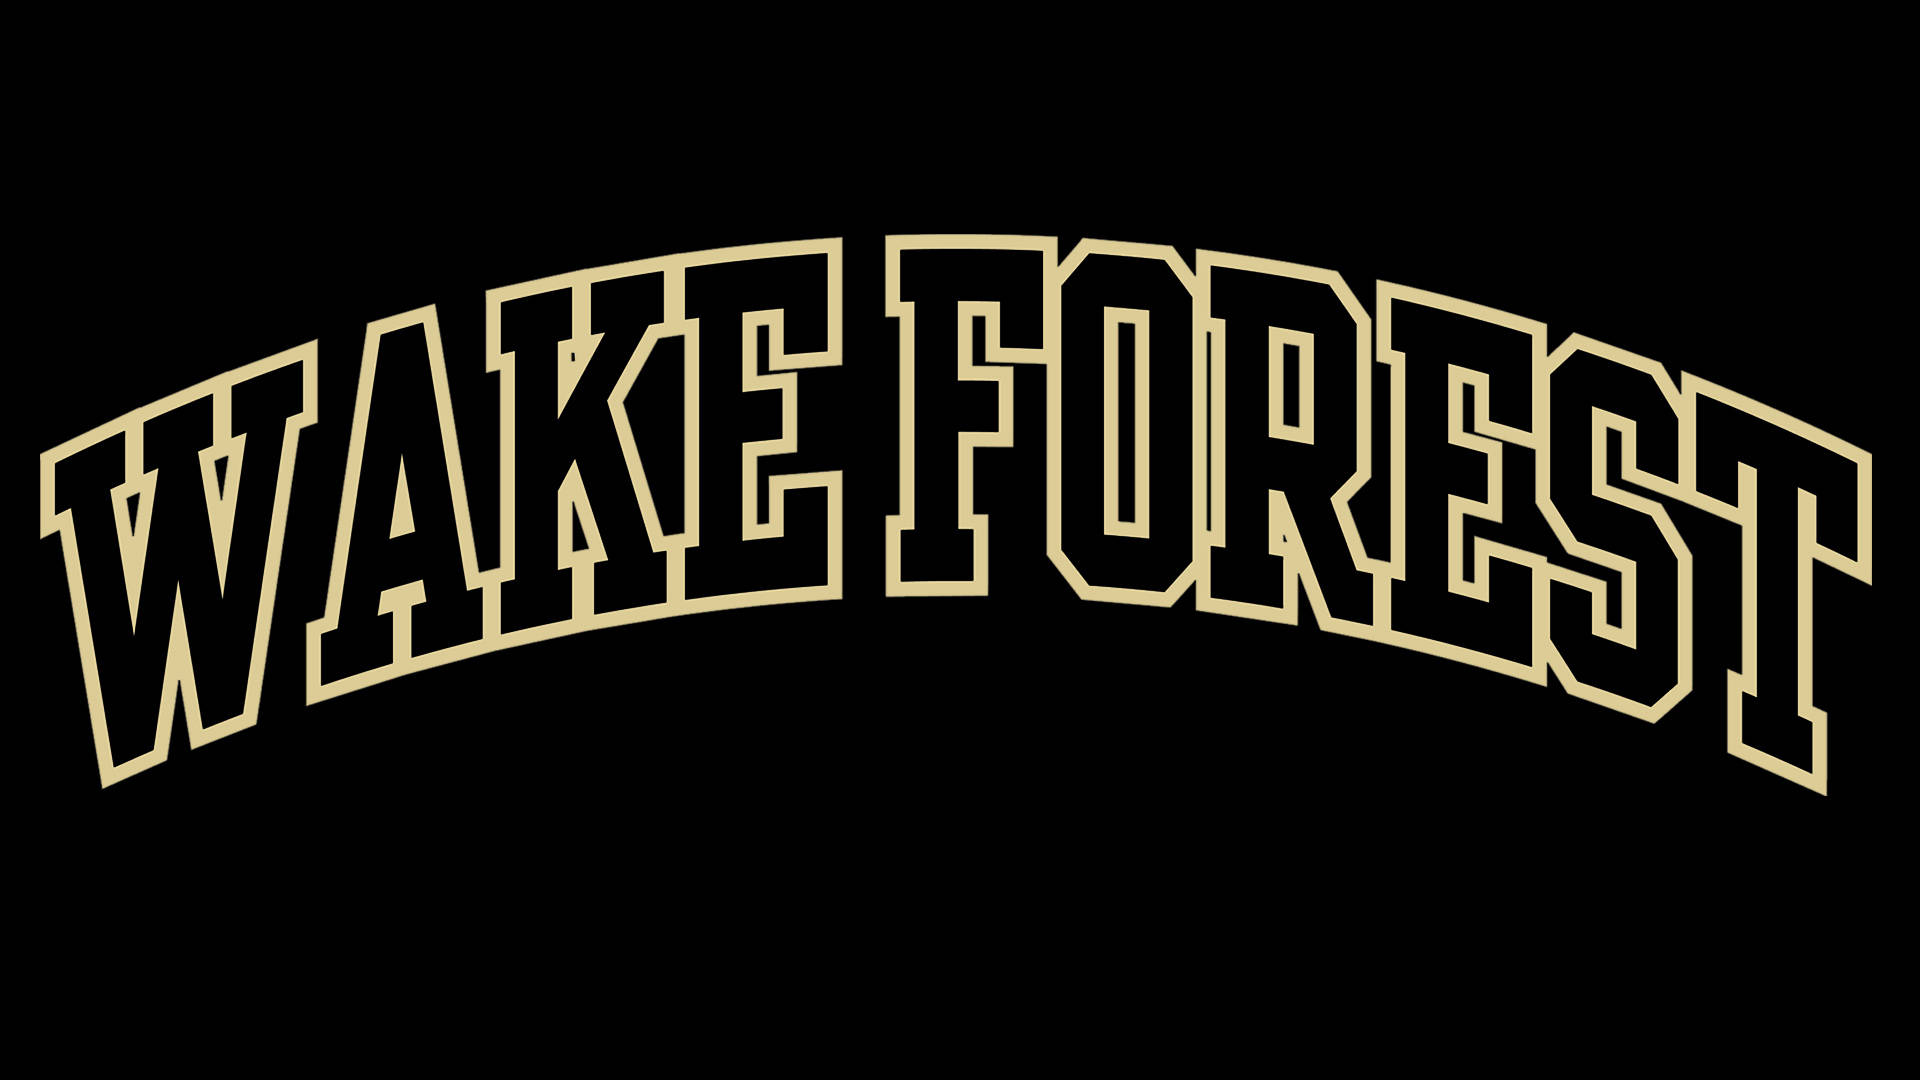 Logode La Universidad Wake Forest En Tono Oscuro Fondo de pantalla